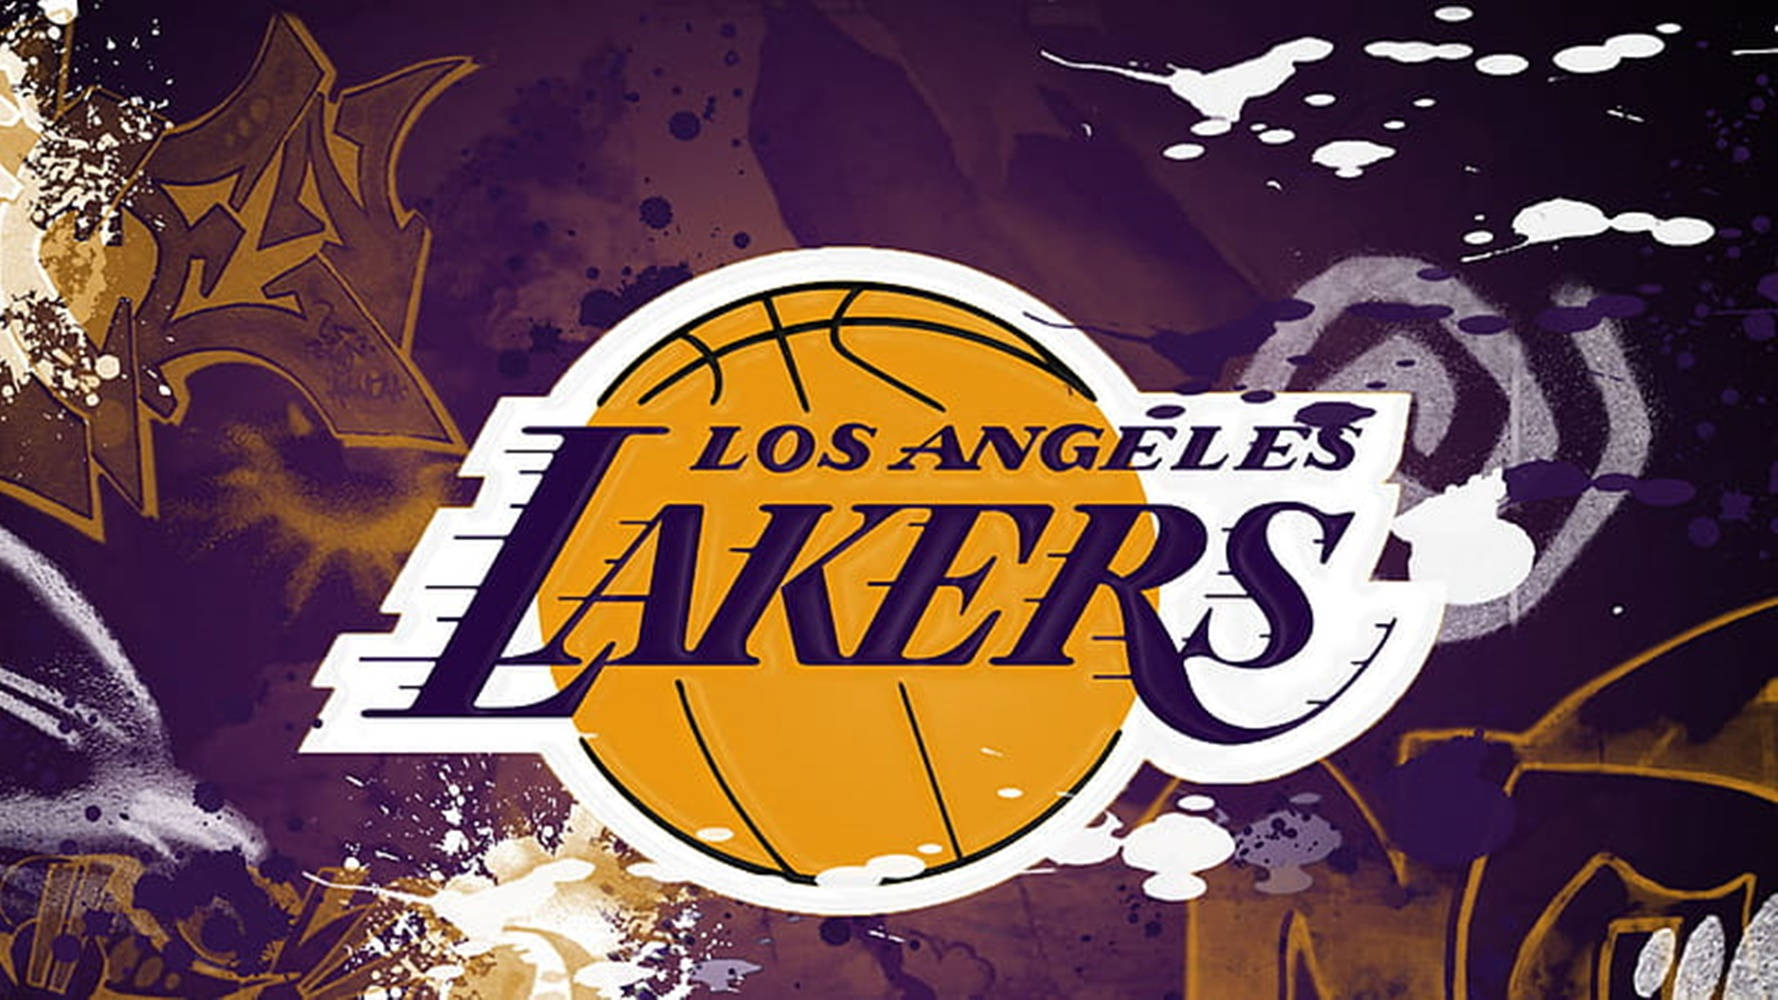 Free Lakers Wallpaper Downloads, Lakers Wallpaper for FREE